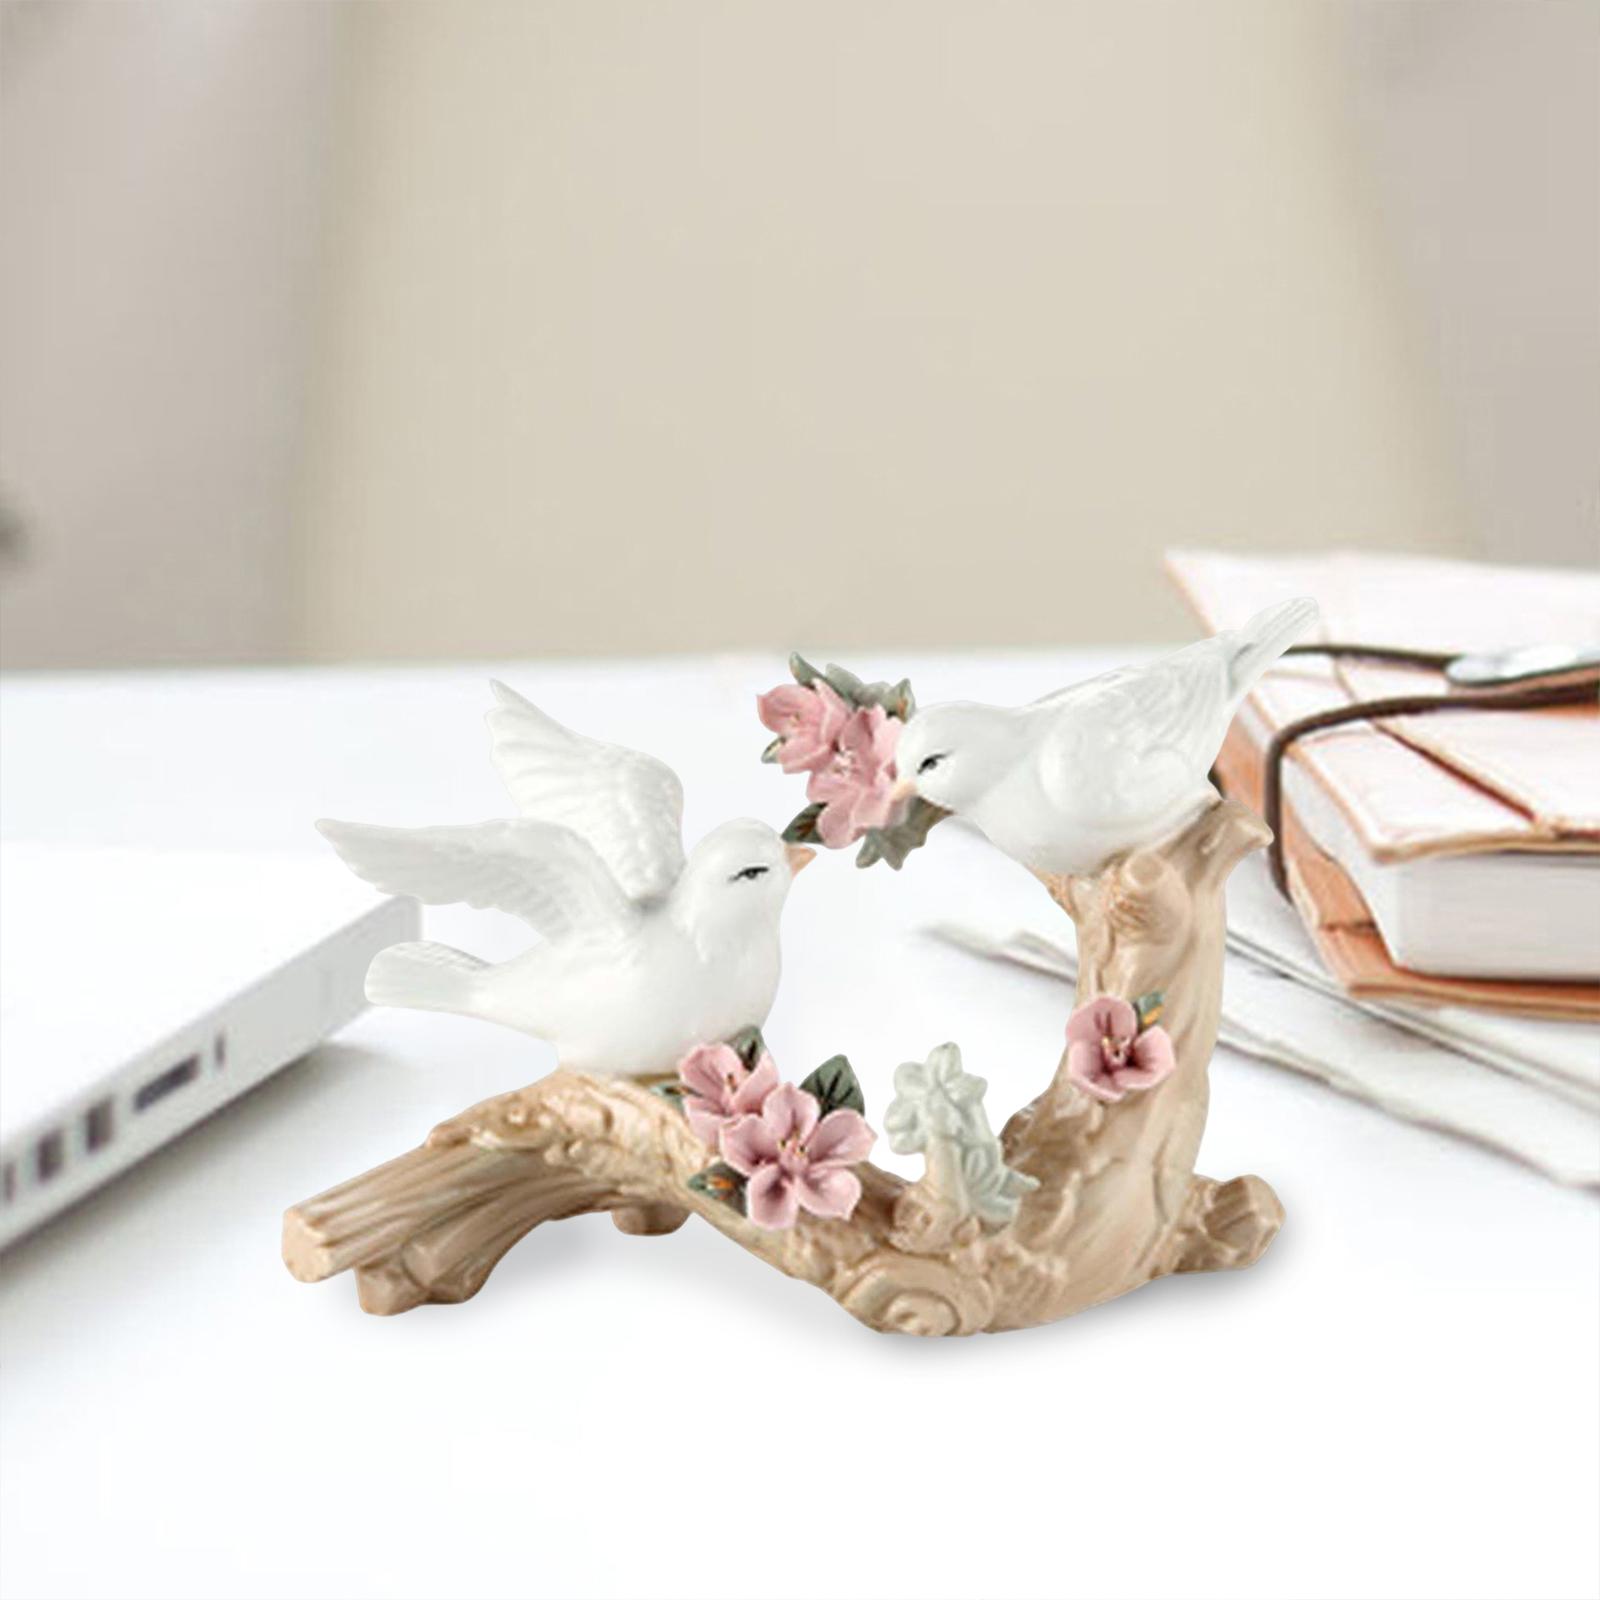 Cute Bird Sculpture Crafts Display Ceramic for Wedding Office Living Room